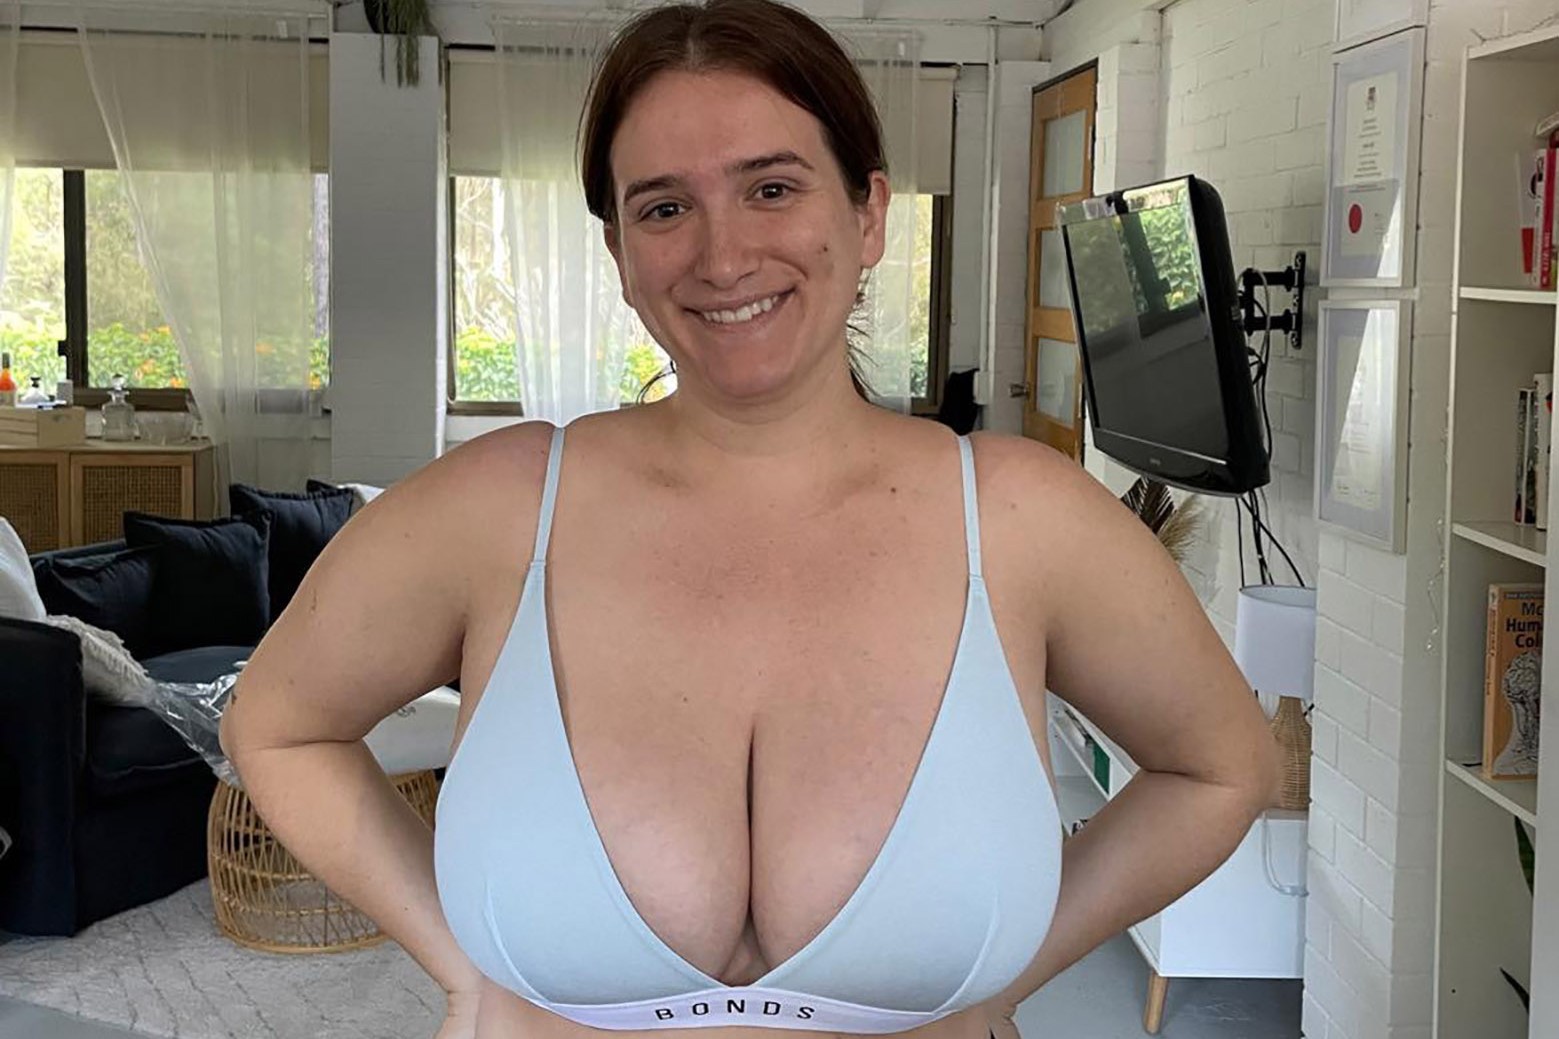 cody homeister share big tits running photos